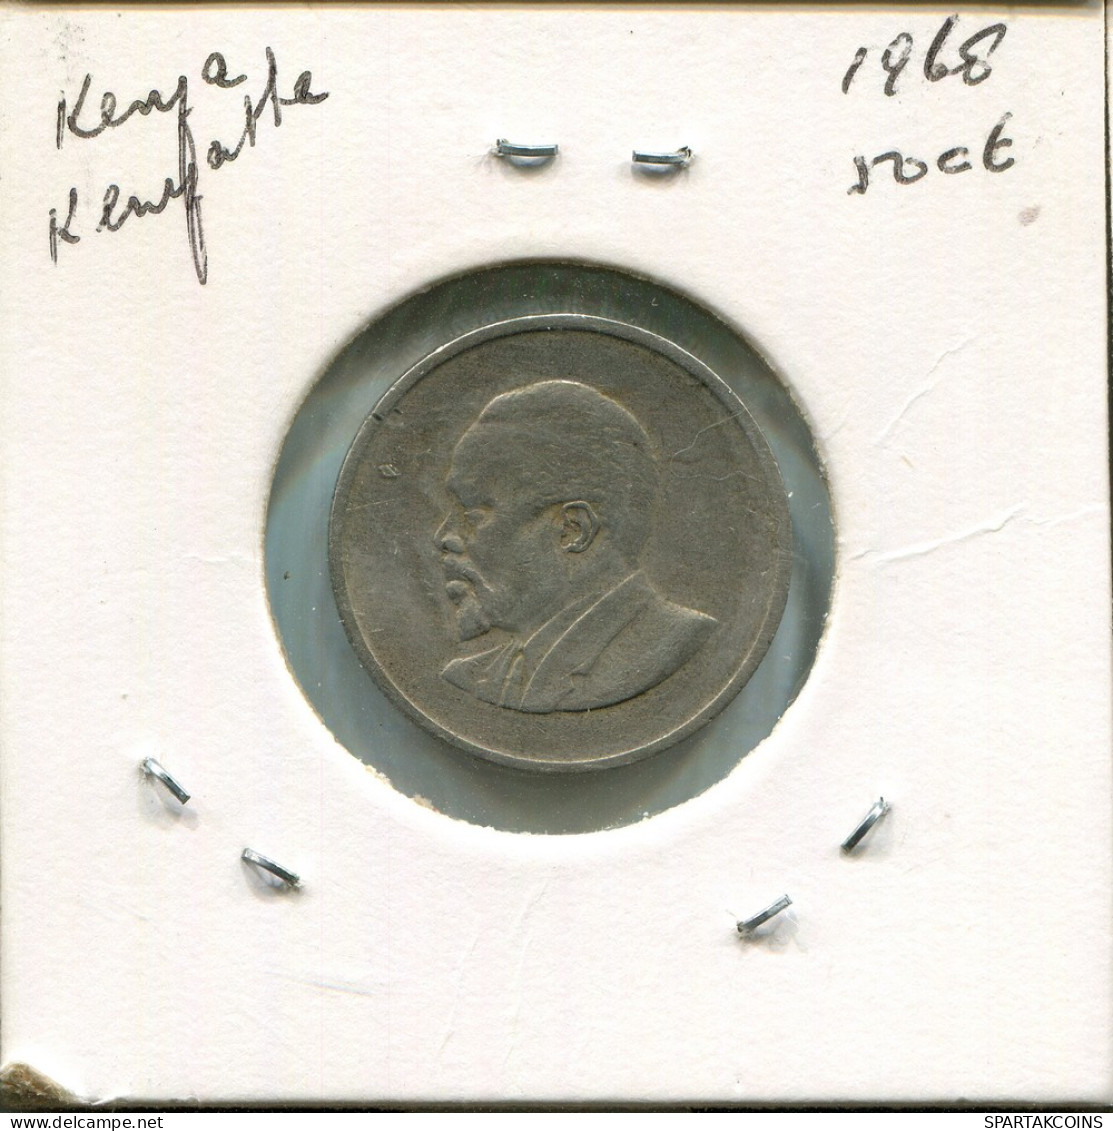 50 CENTS 1968 KENYA Coin #AN739.U - Kenya